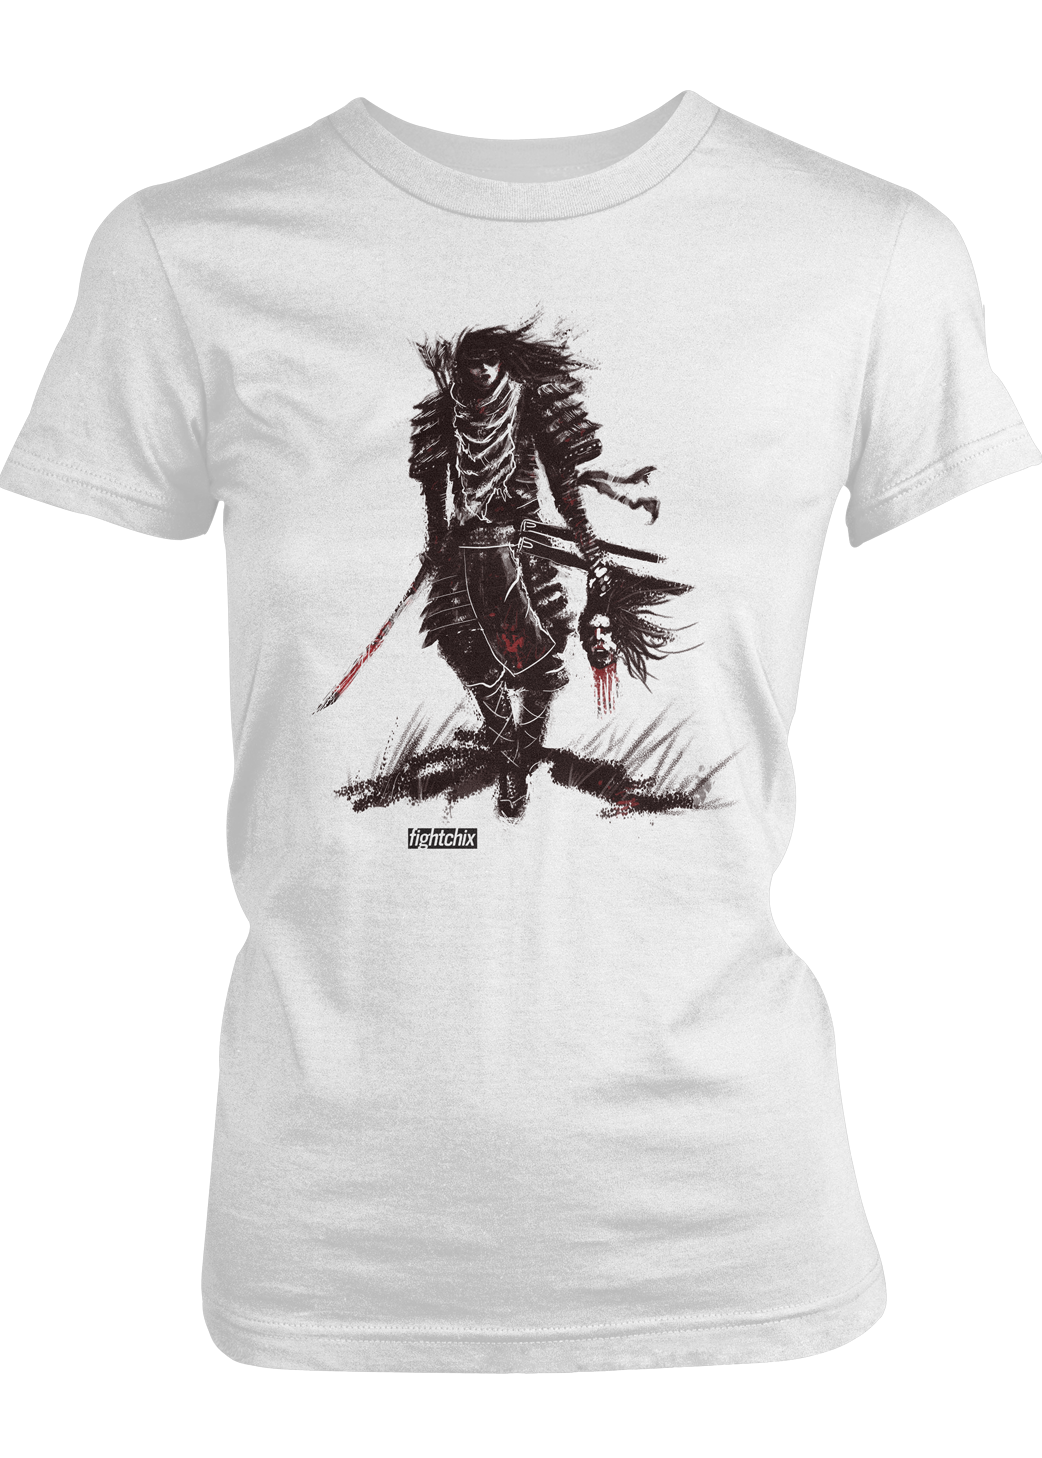 TOMOE GOZEN, BEAUTIFUL BADASS women's t-shirt